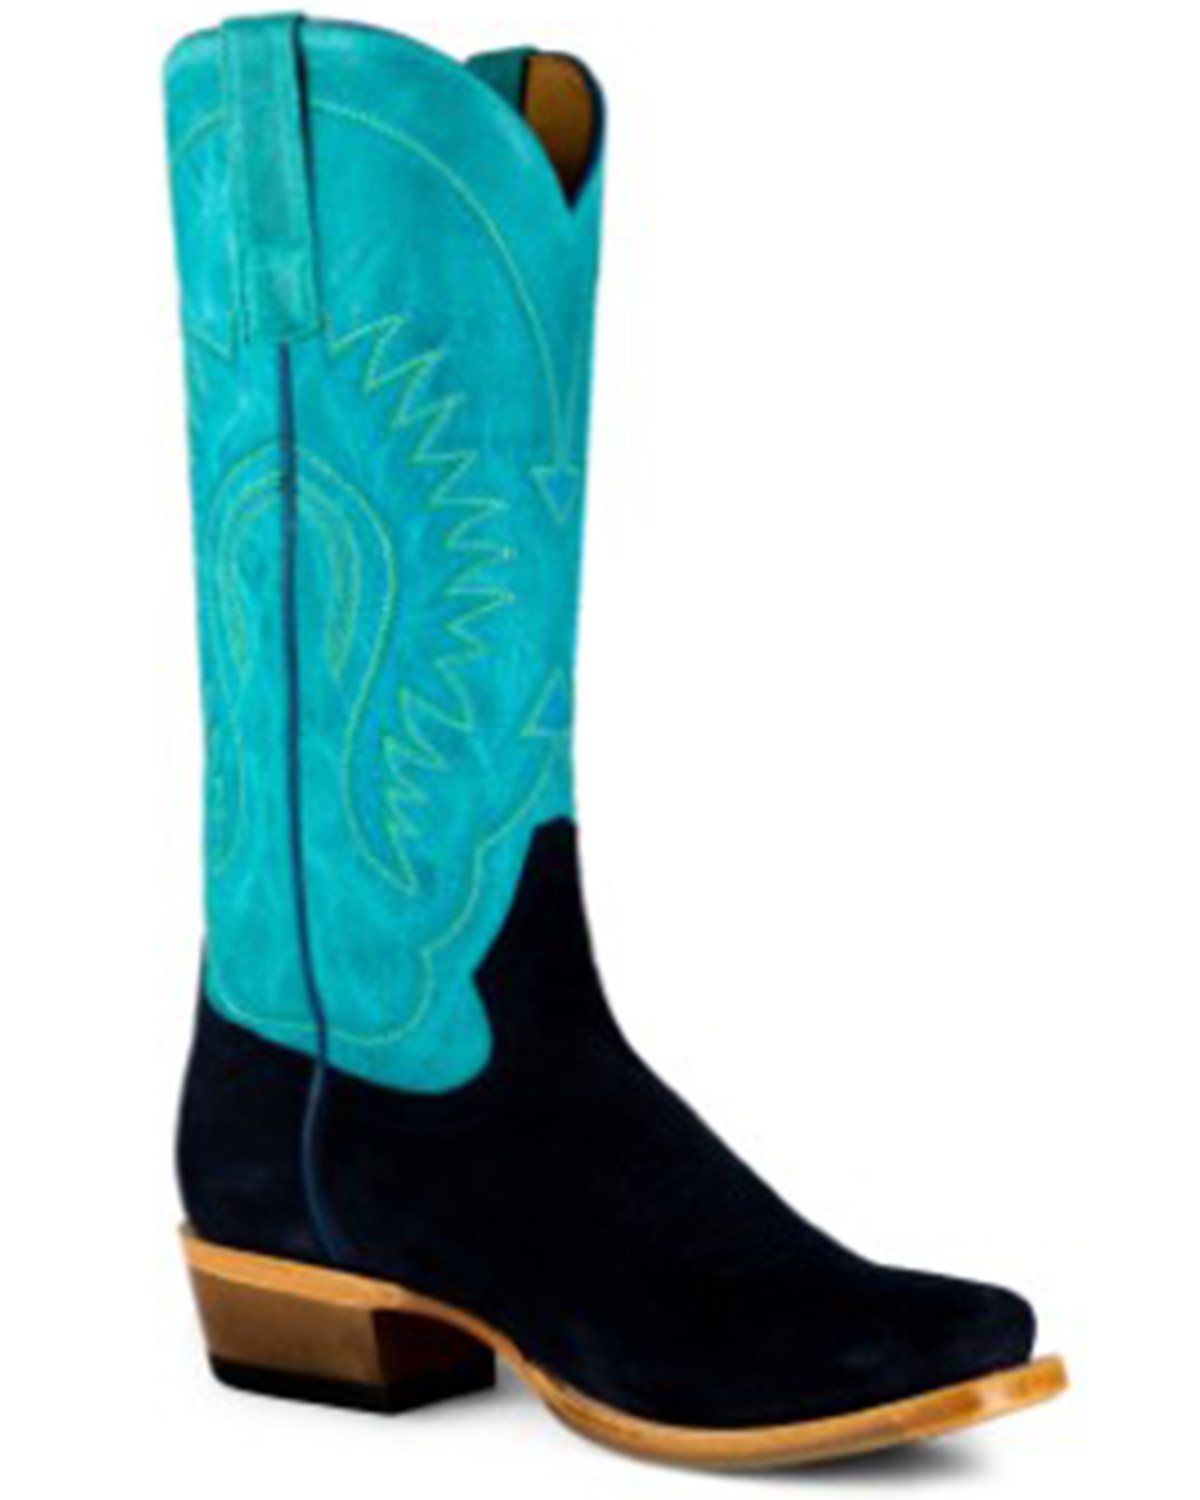 Macie Bean Women's Looney Moon Western Boots - Square Toe